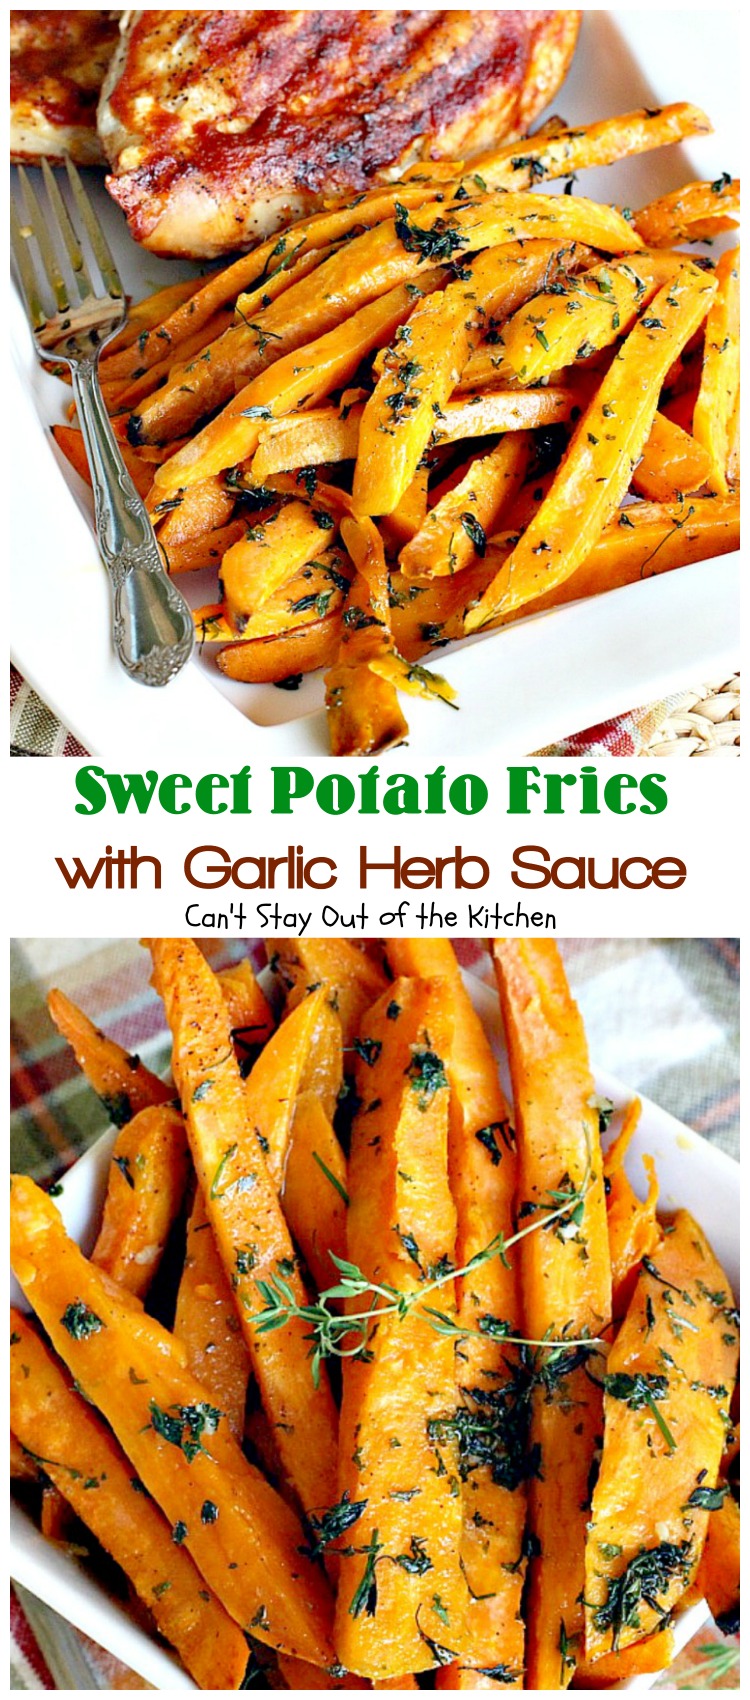 http://cantstayoutofthekitchen.com/wp-content/uploads/Sweet-Potato-Fries-with-Garlic-Herb-Sauce-Collage.jpg